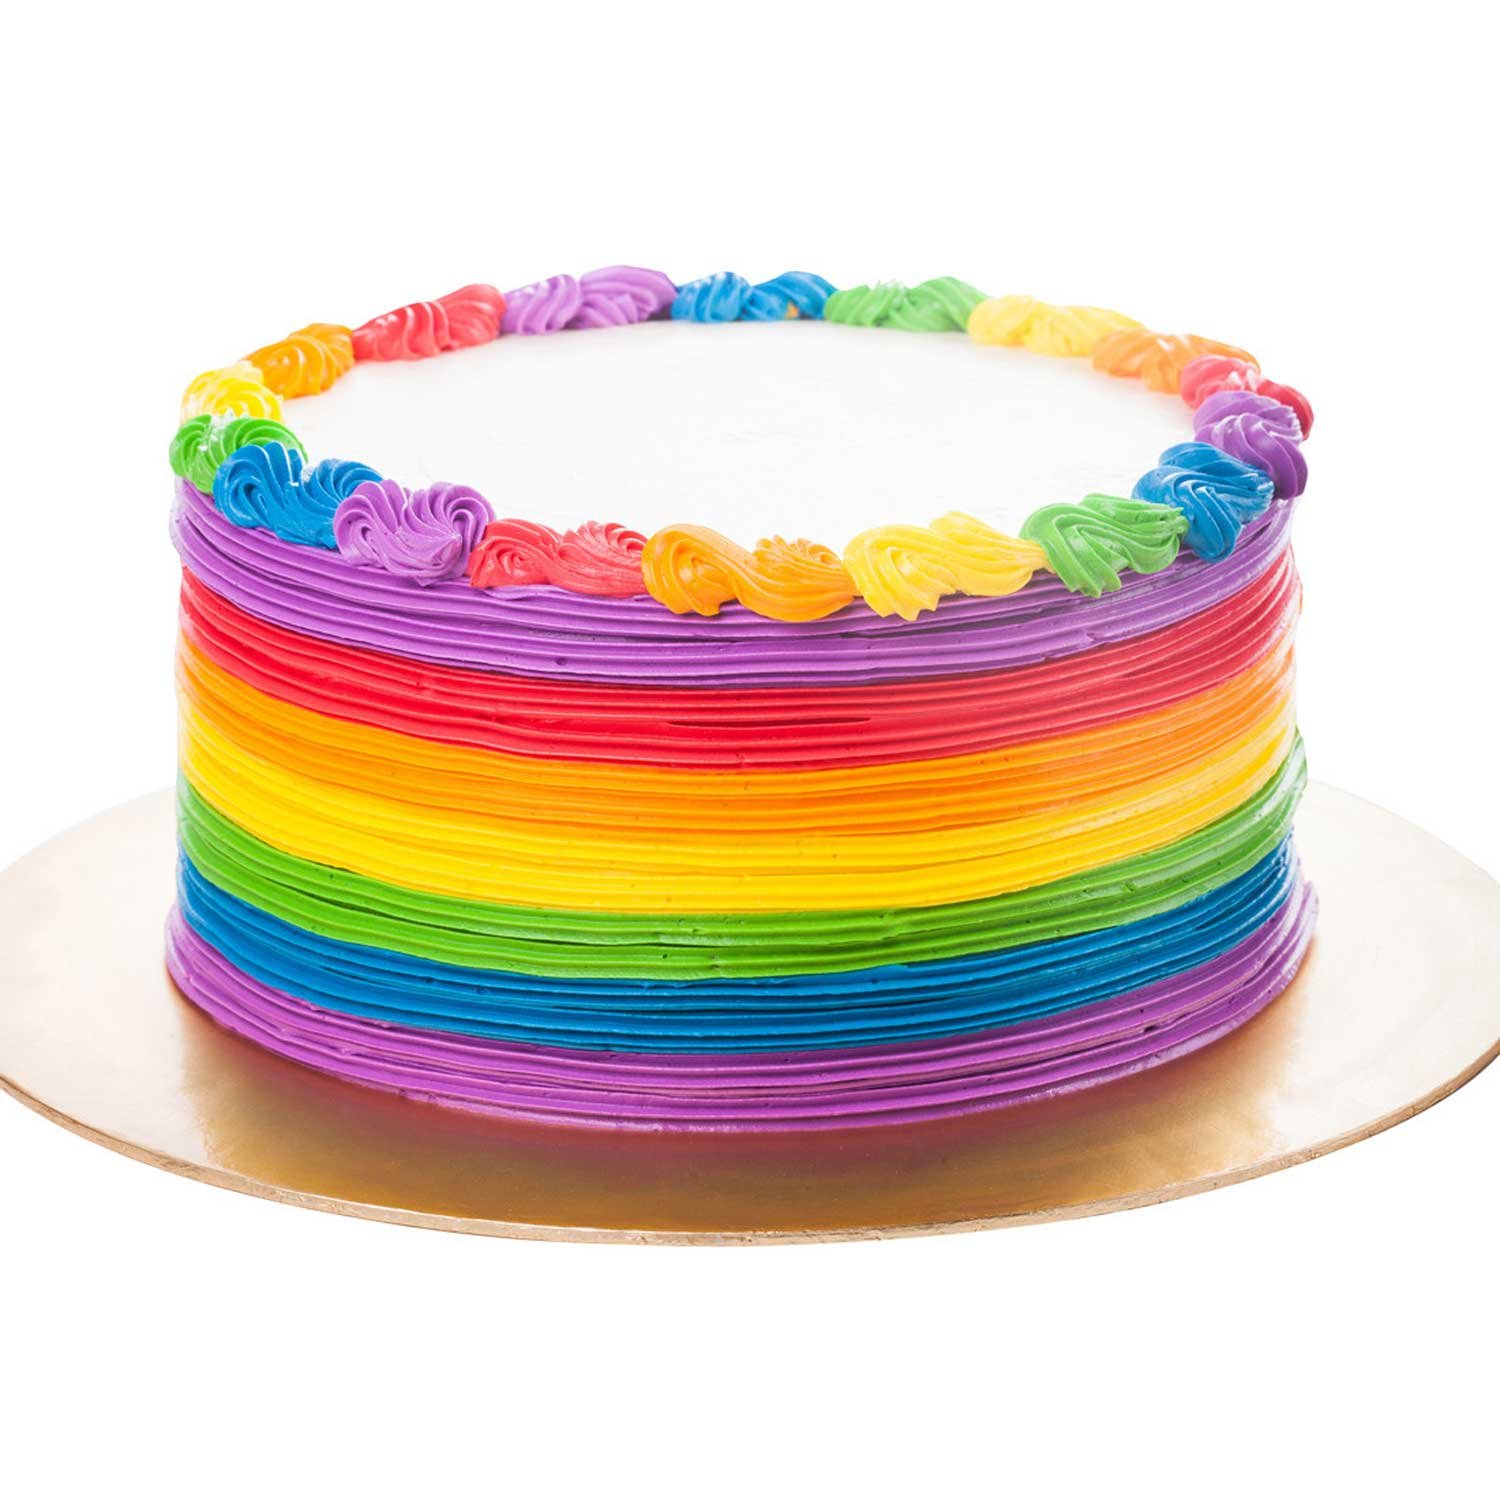 Rainbow Cake | Trivandrum Cake House | Online Cake Shop in Trivandrum